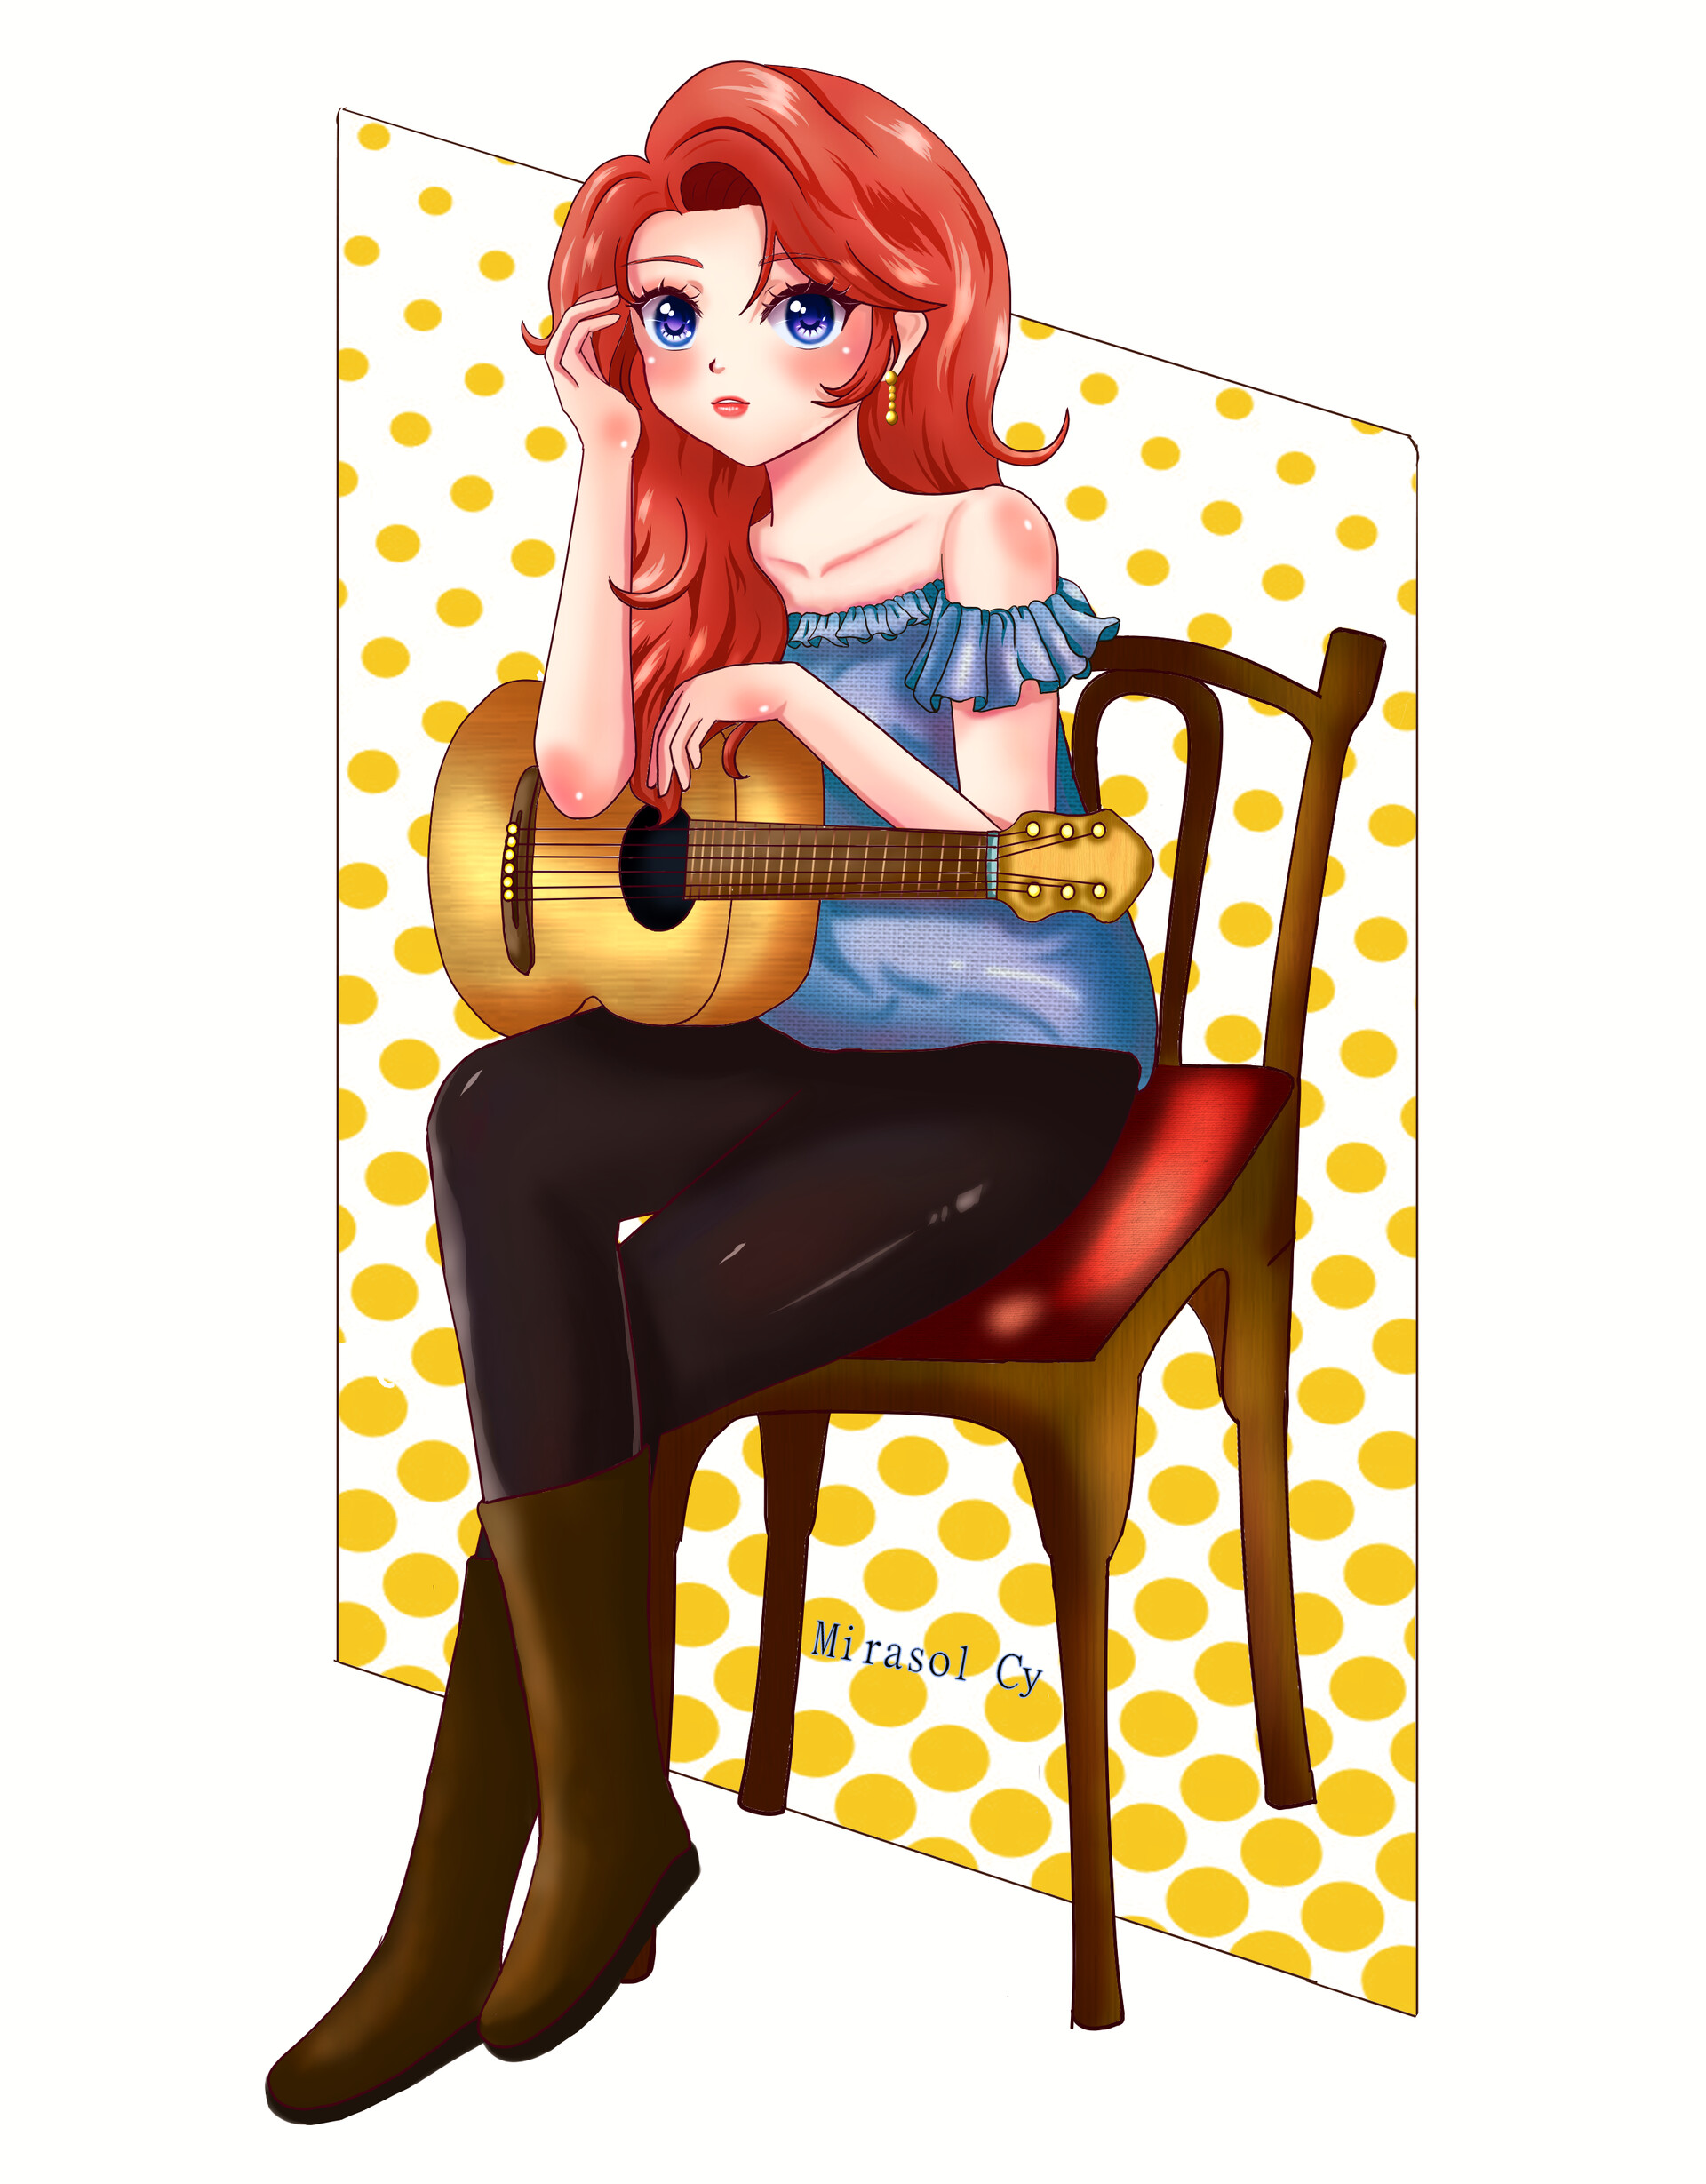 ArtStation - Anime girl with guitar